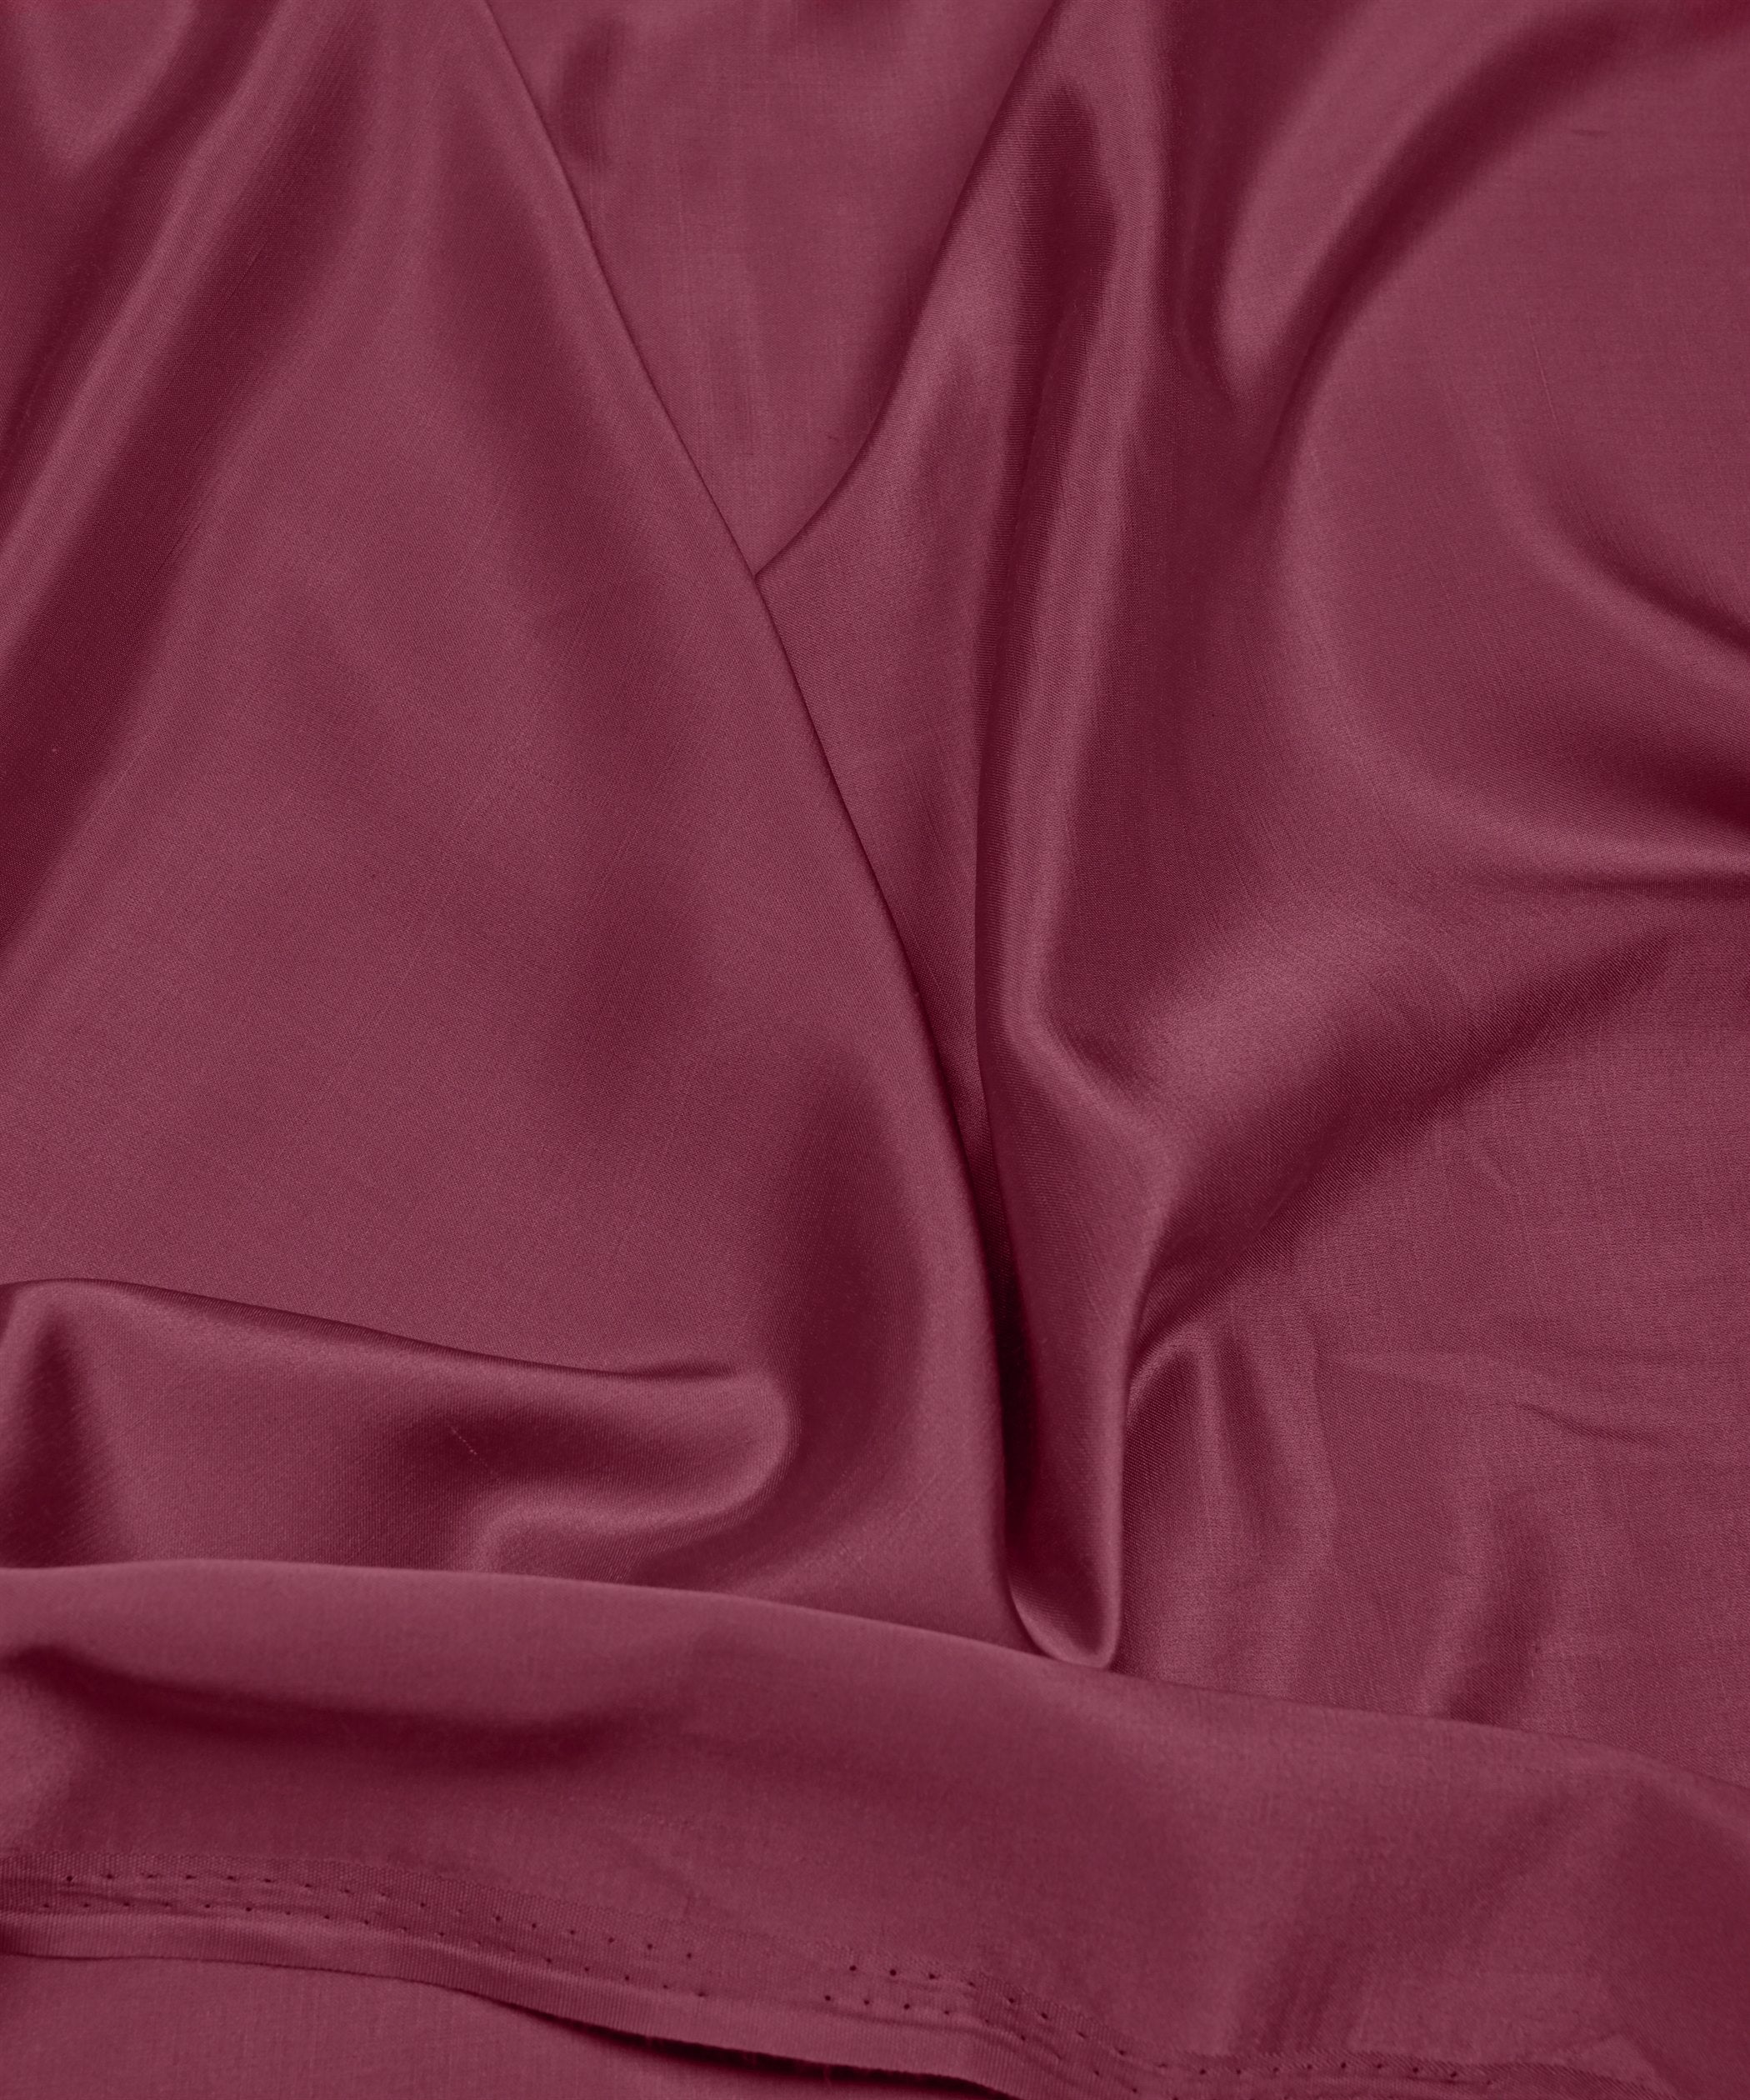 Glossy Maroon Plain Dyed Modal Satin Fabric